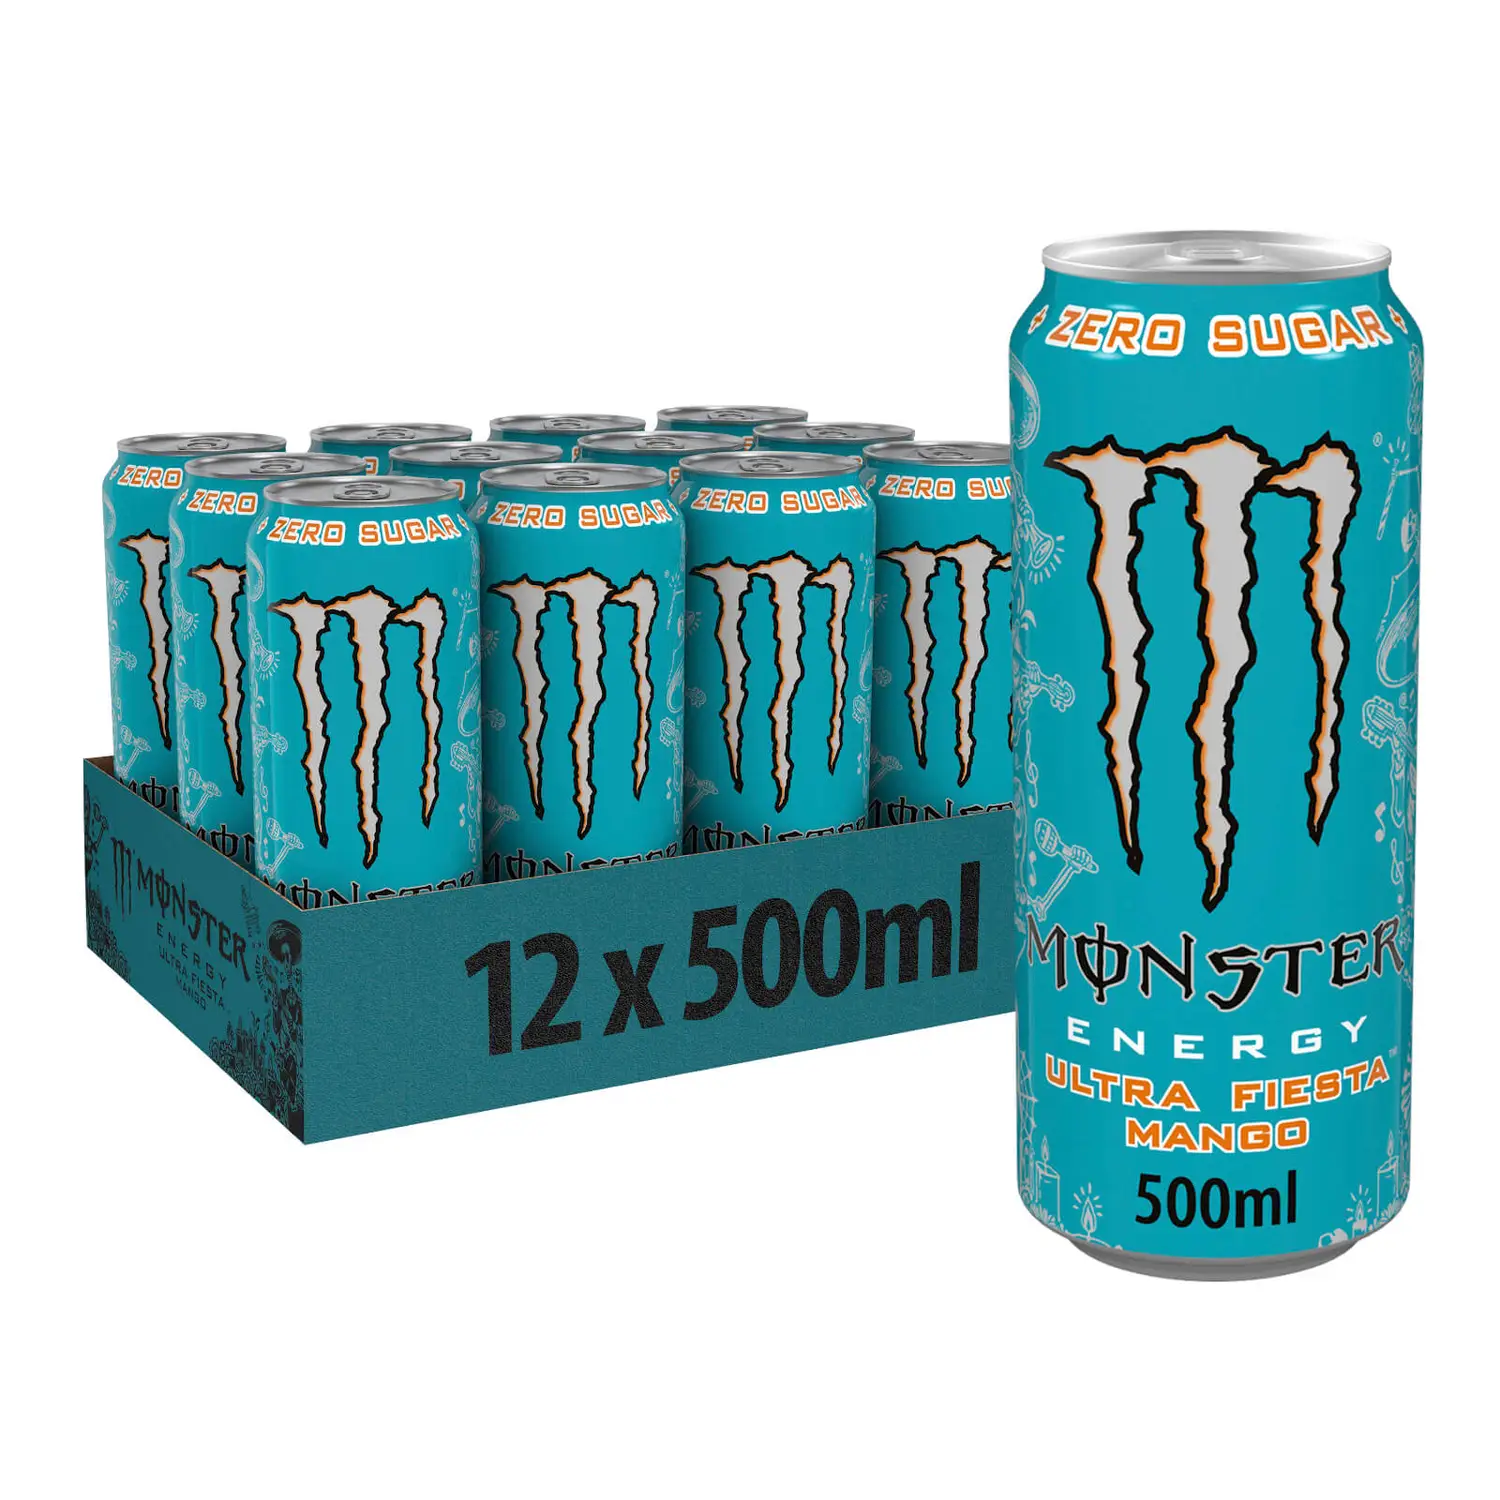 Monster Energy Drink 12x500ml (Ultra Fiesta Mango)